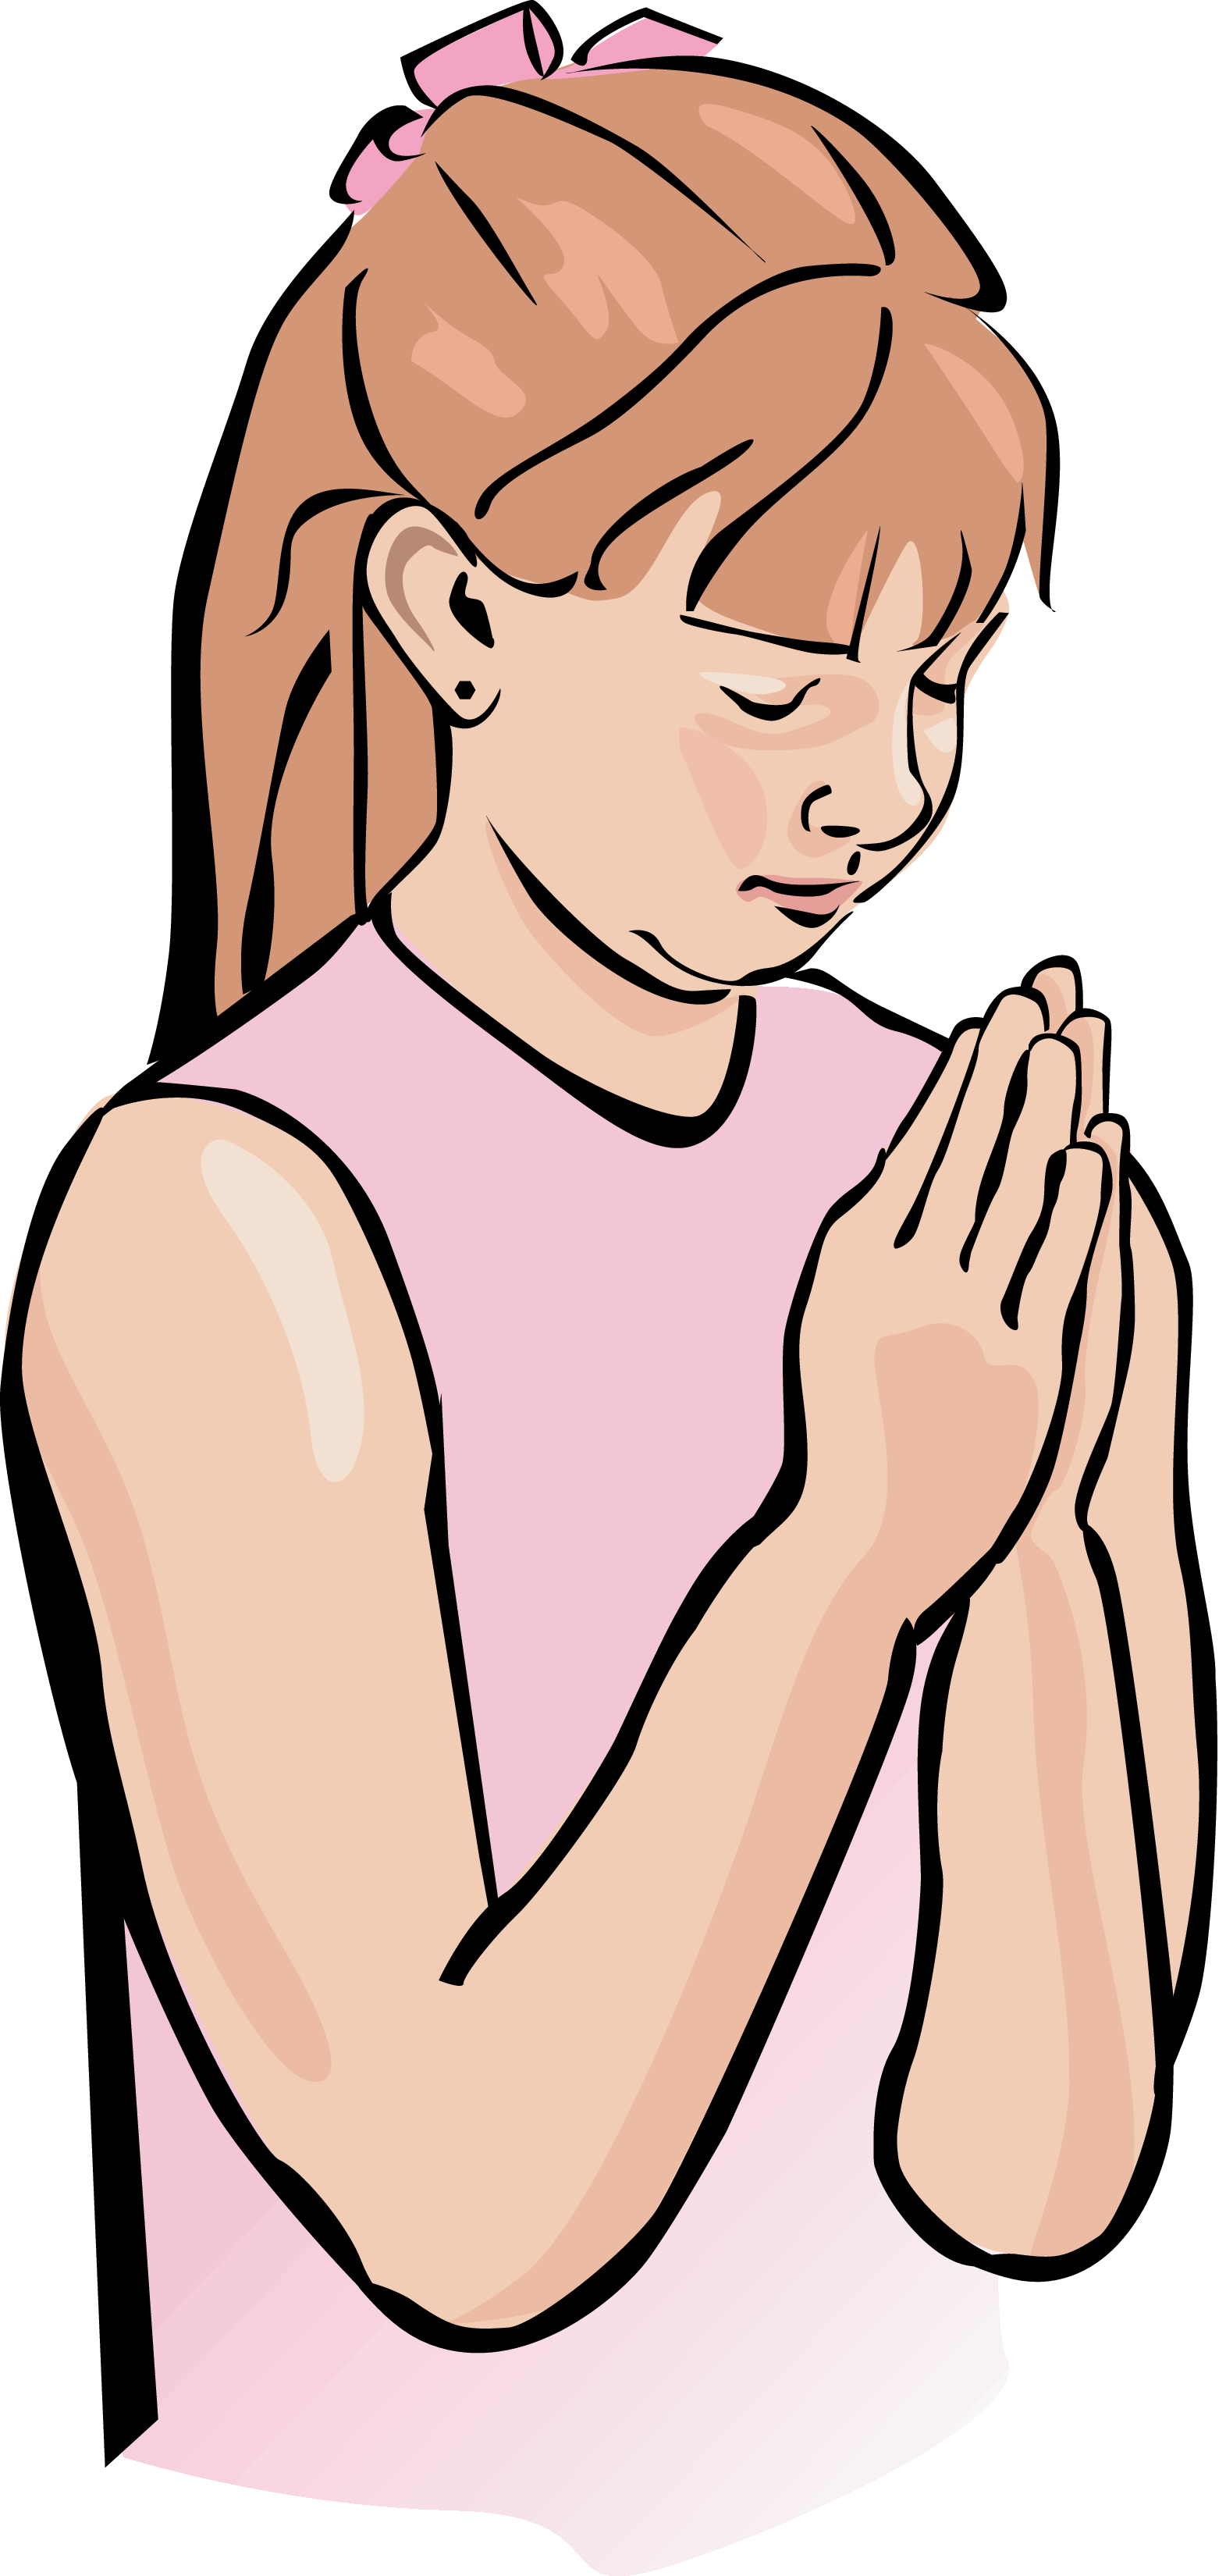 free clipart little girl praying - photo #37